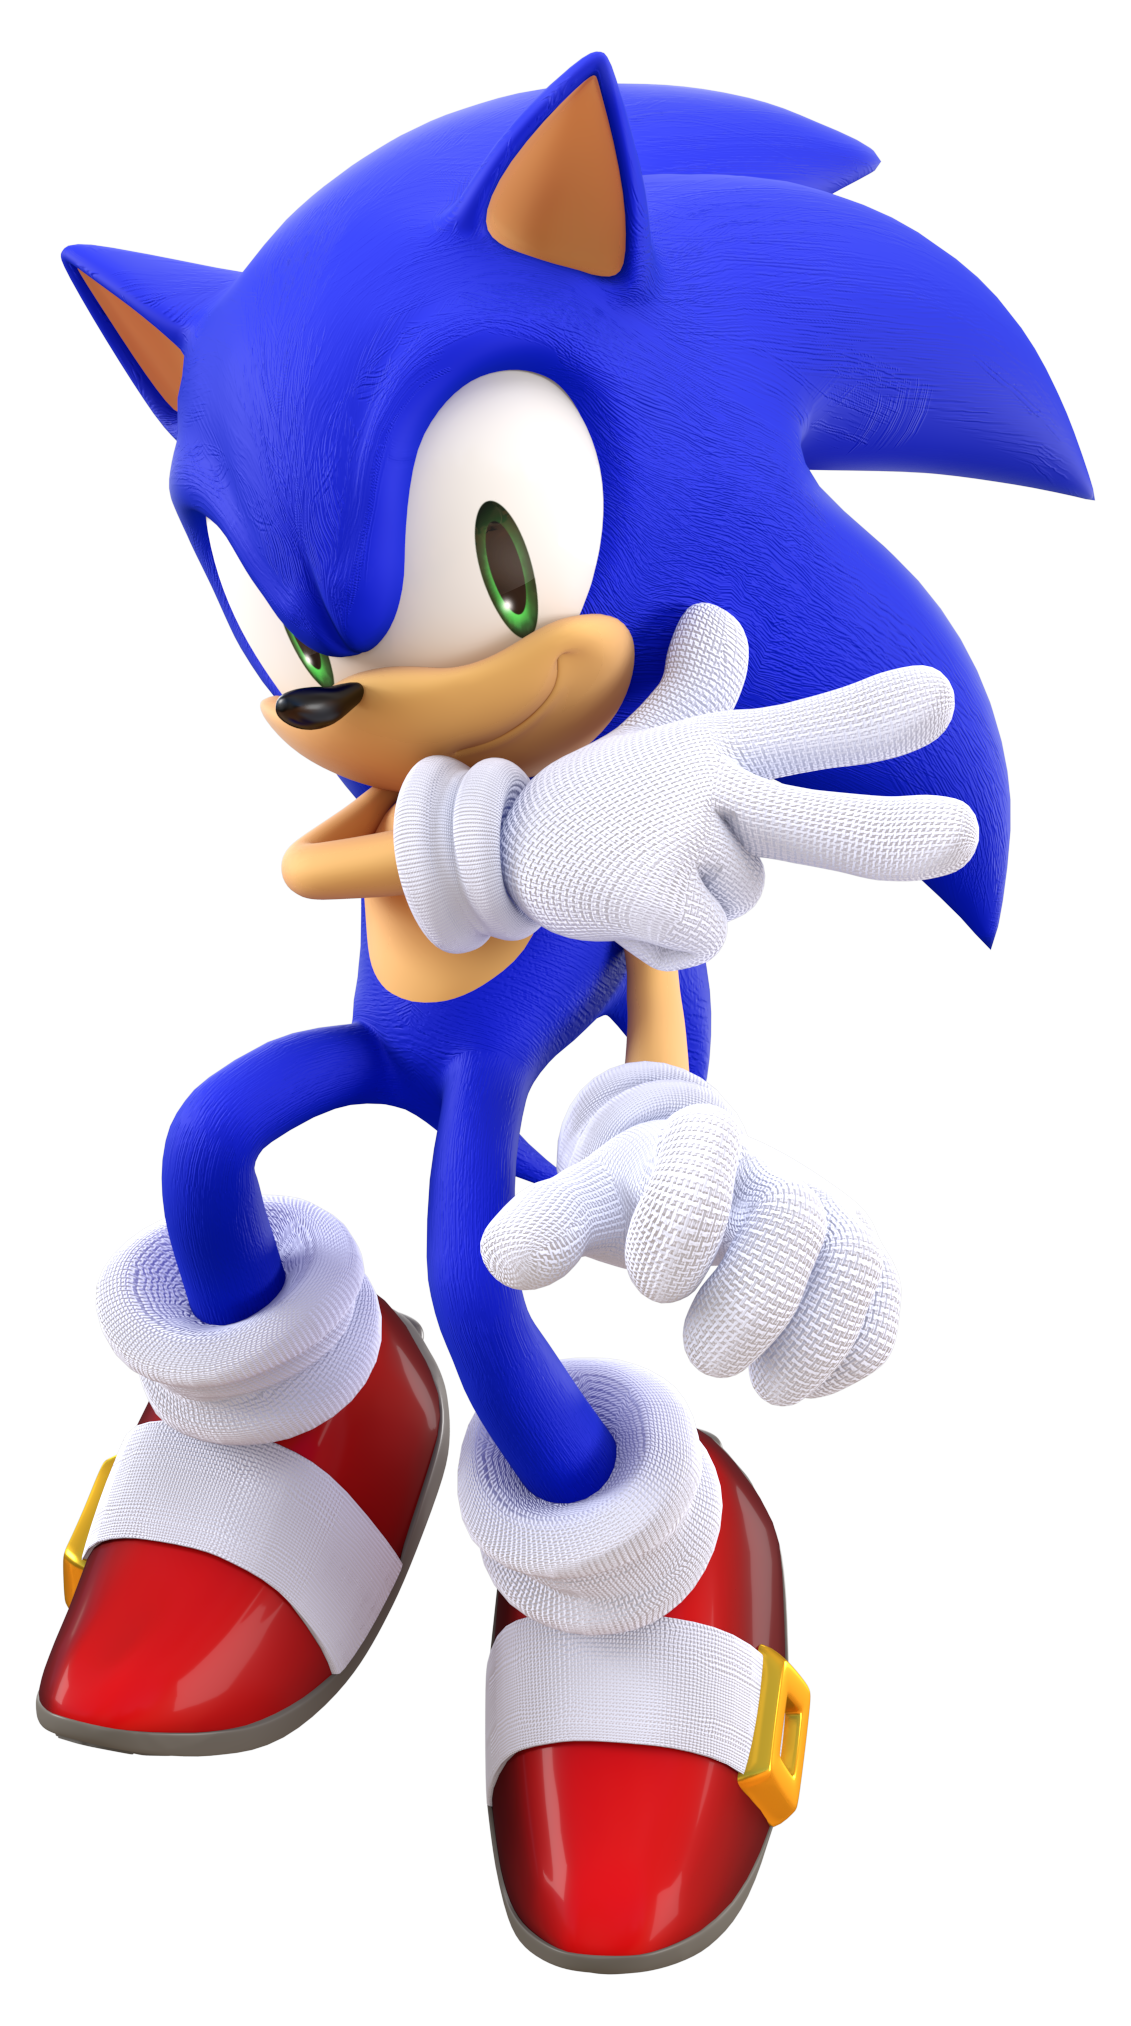 Una pelotita azul de súper - Sonic The Hedgehog Movie